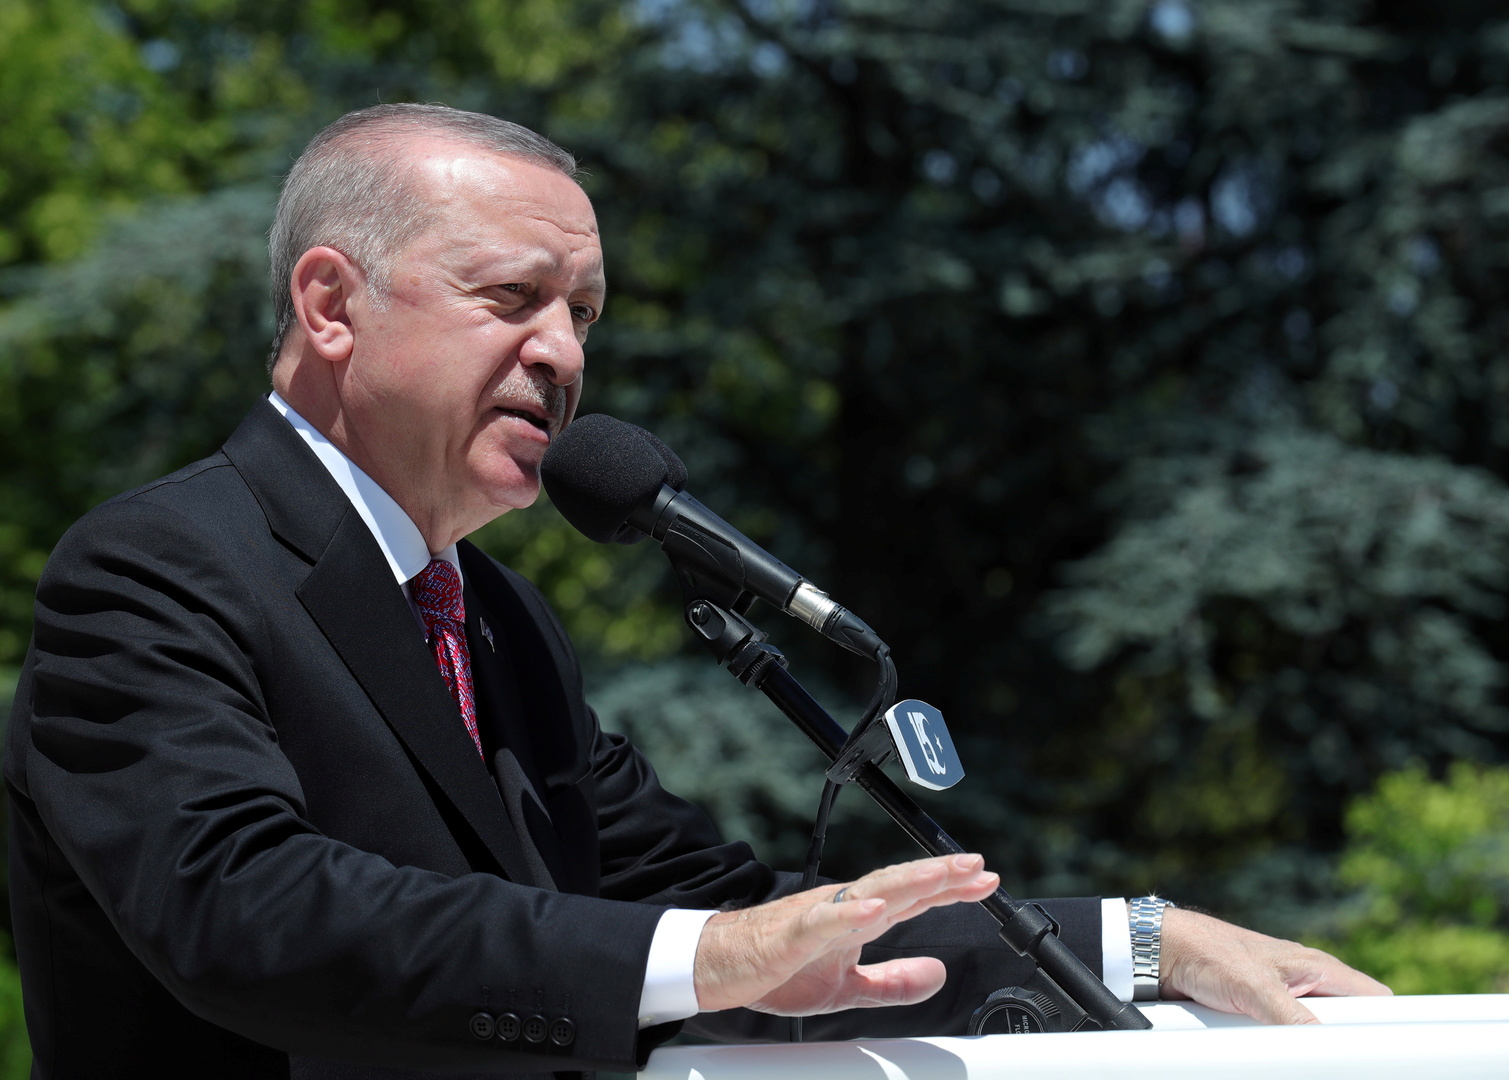 أردوغان: ننوي خوض مفاوضات مع 